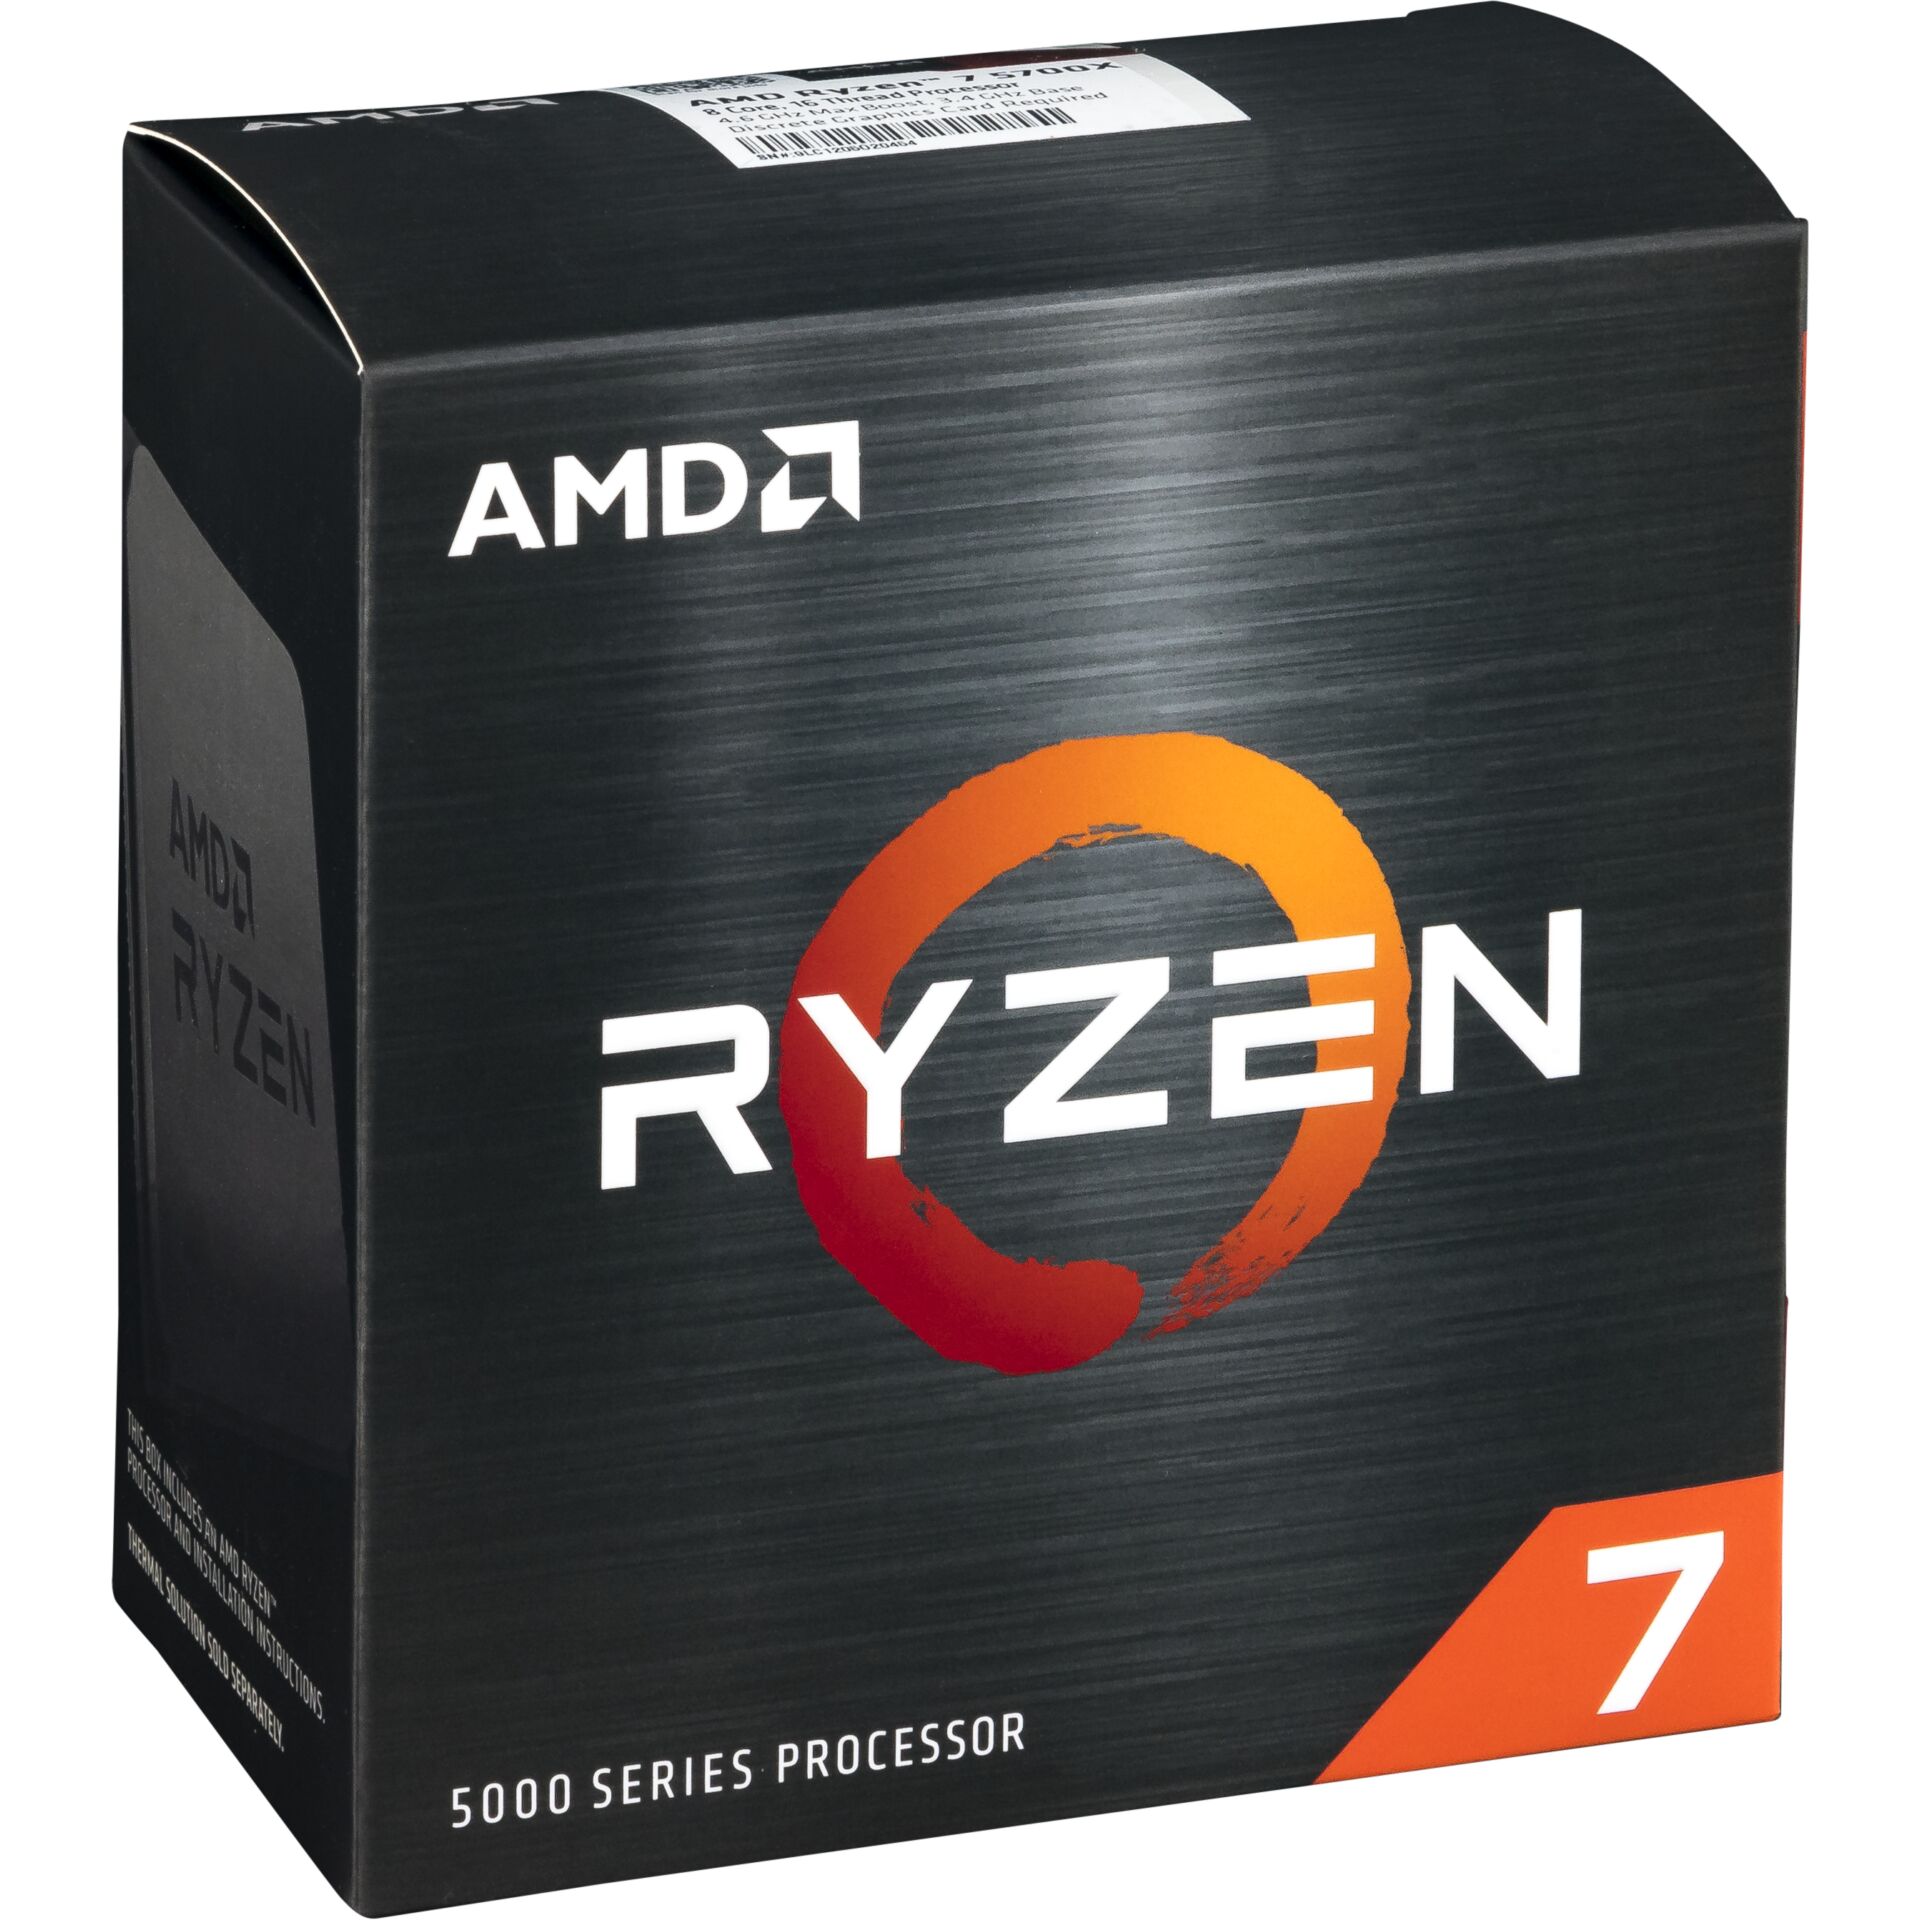 AMD Ryzen 7 5700X, 8C/16T, 3.40-4.60GHz, boxed ohne Kühler, Sockel AM4 (PGA), Vermeer CPU